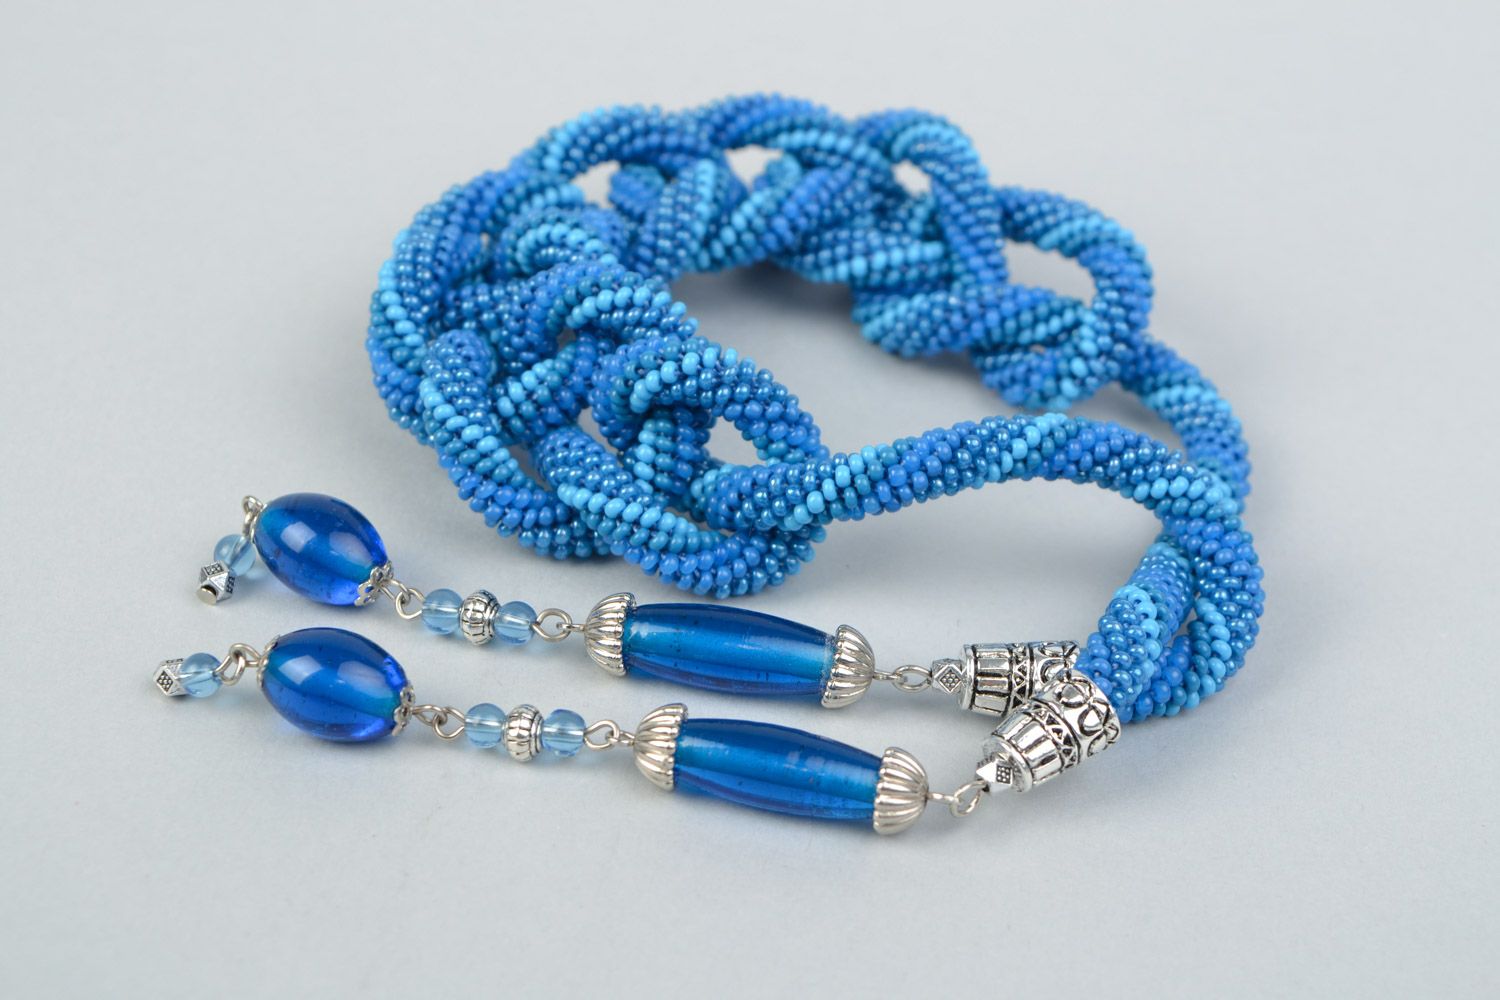 Handmade lariat blue beaded necklace made of Czech glass photo 1